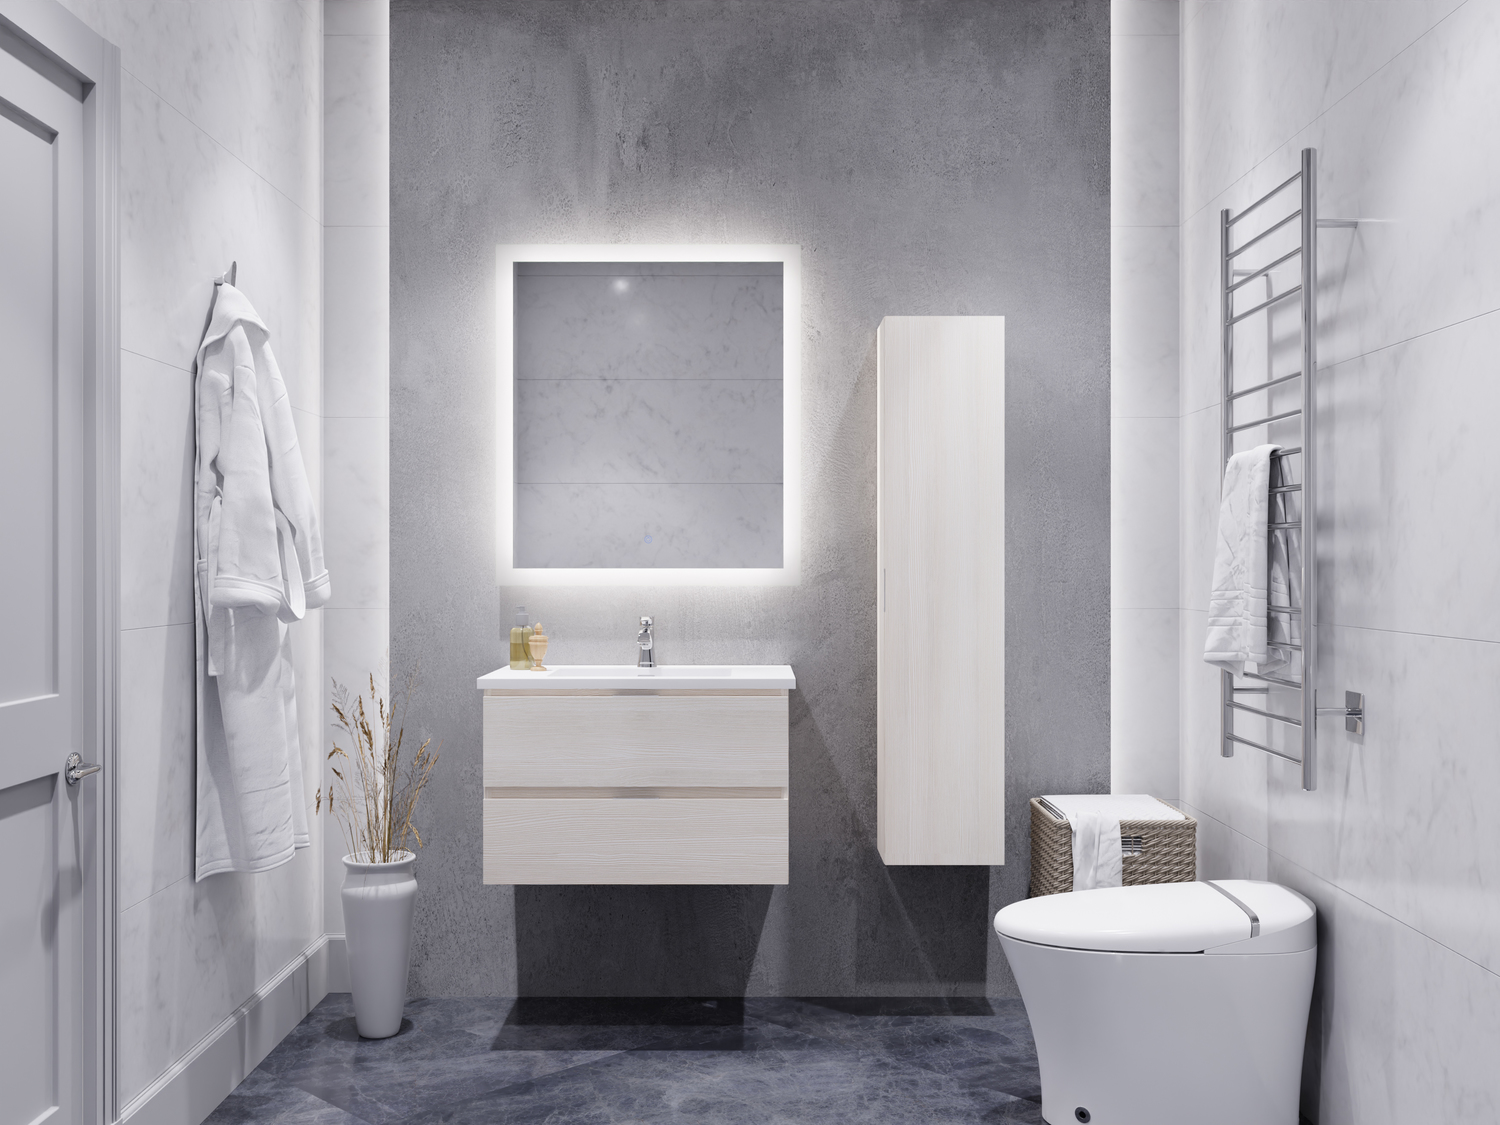 cherry wood bathroom vanity Anzzi BATHROOM - Vanities - Vanity Sets White